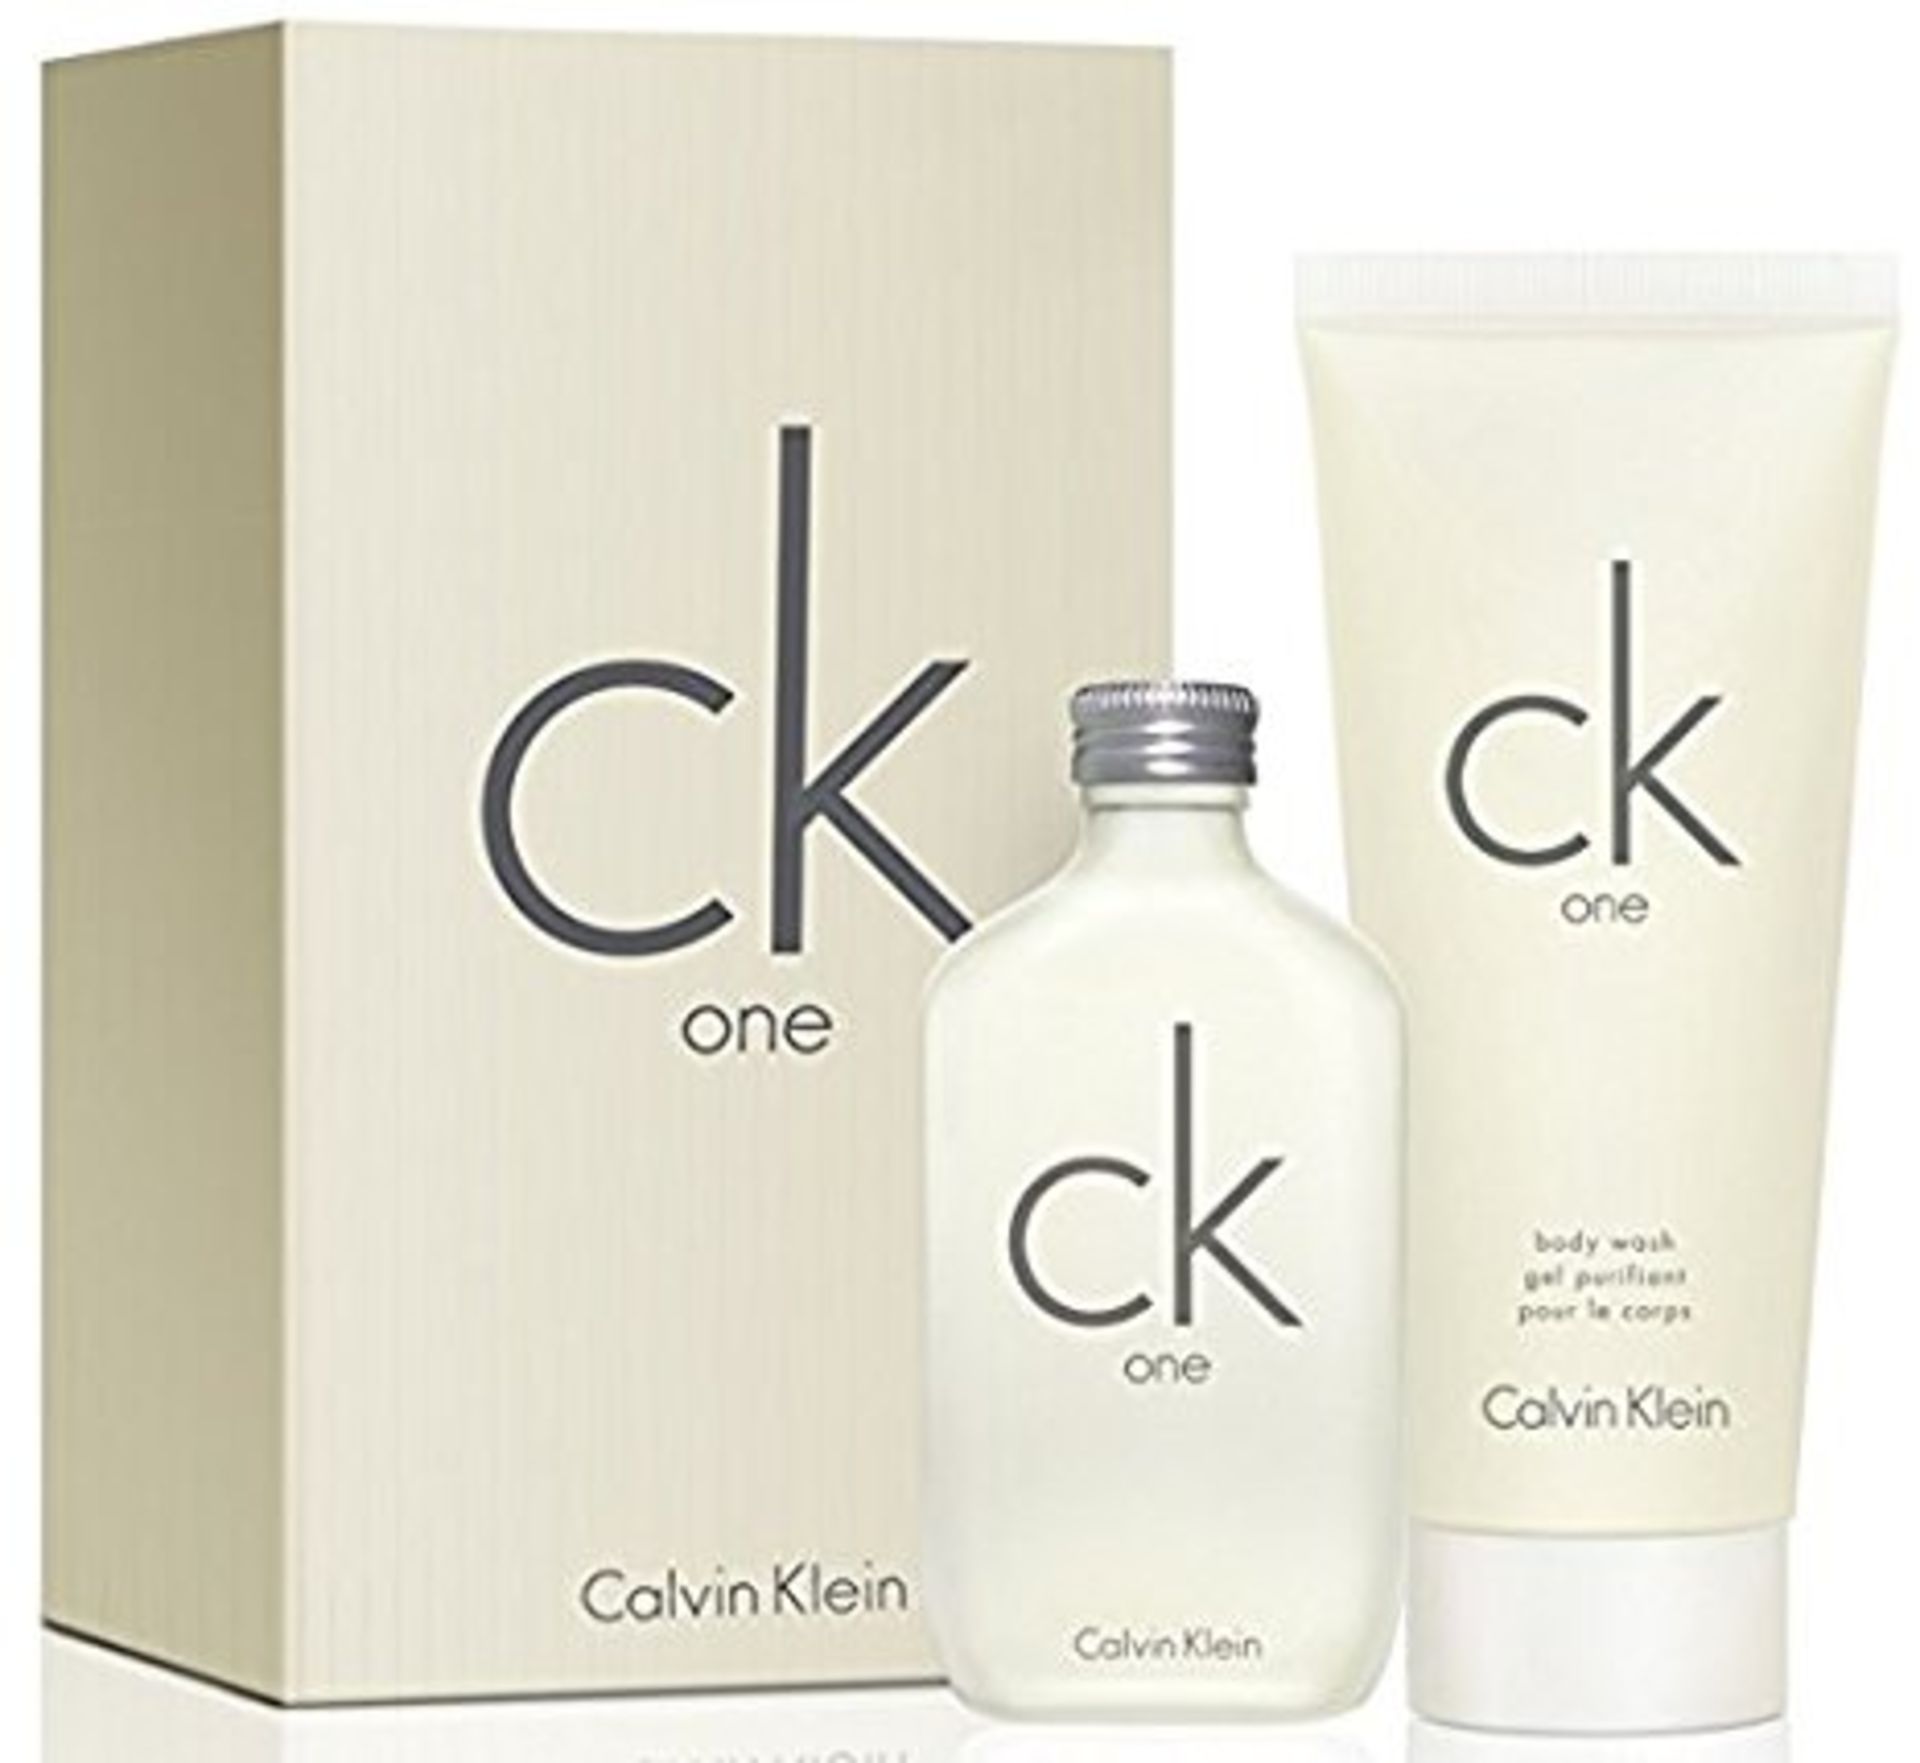 V Brand New Calvin Klein CK One Gift Set Including Eau De Toilette Spray (50ml) and Body Wash (